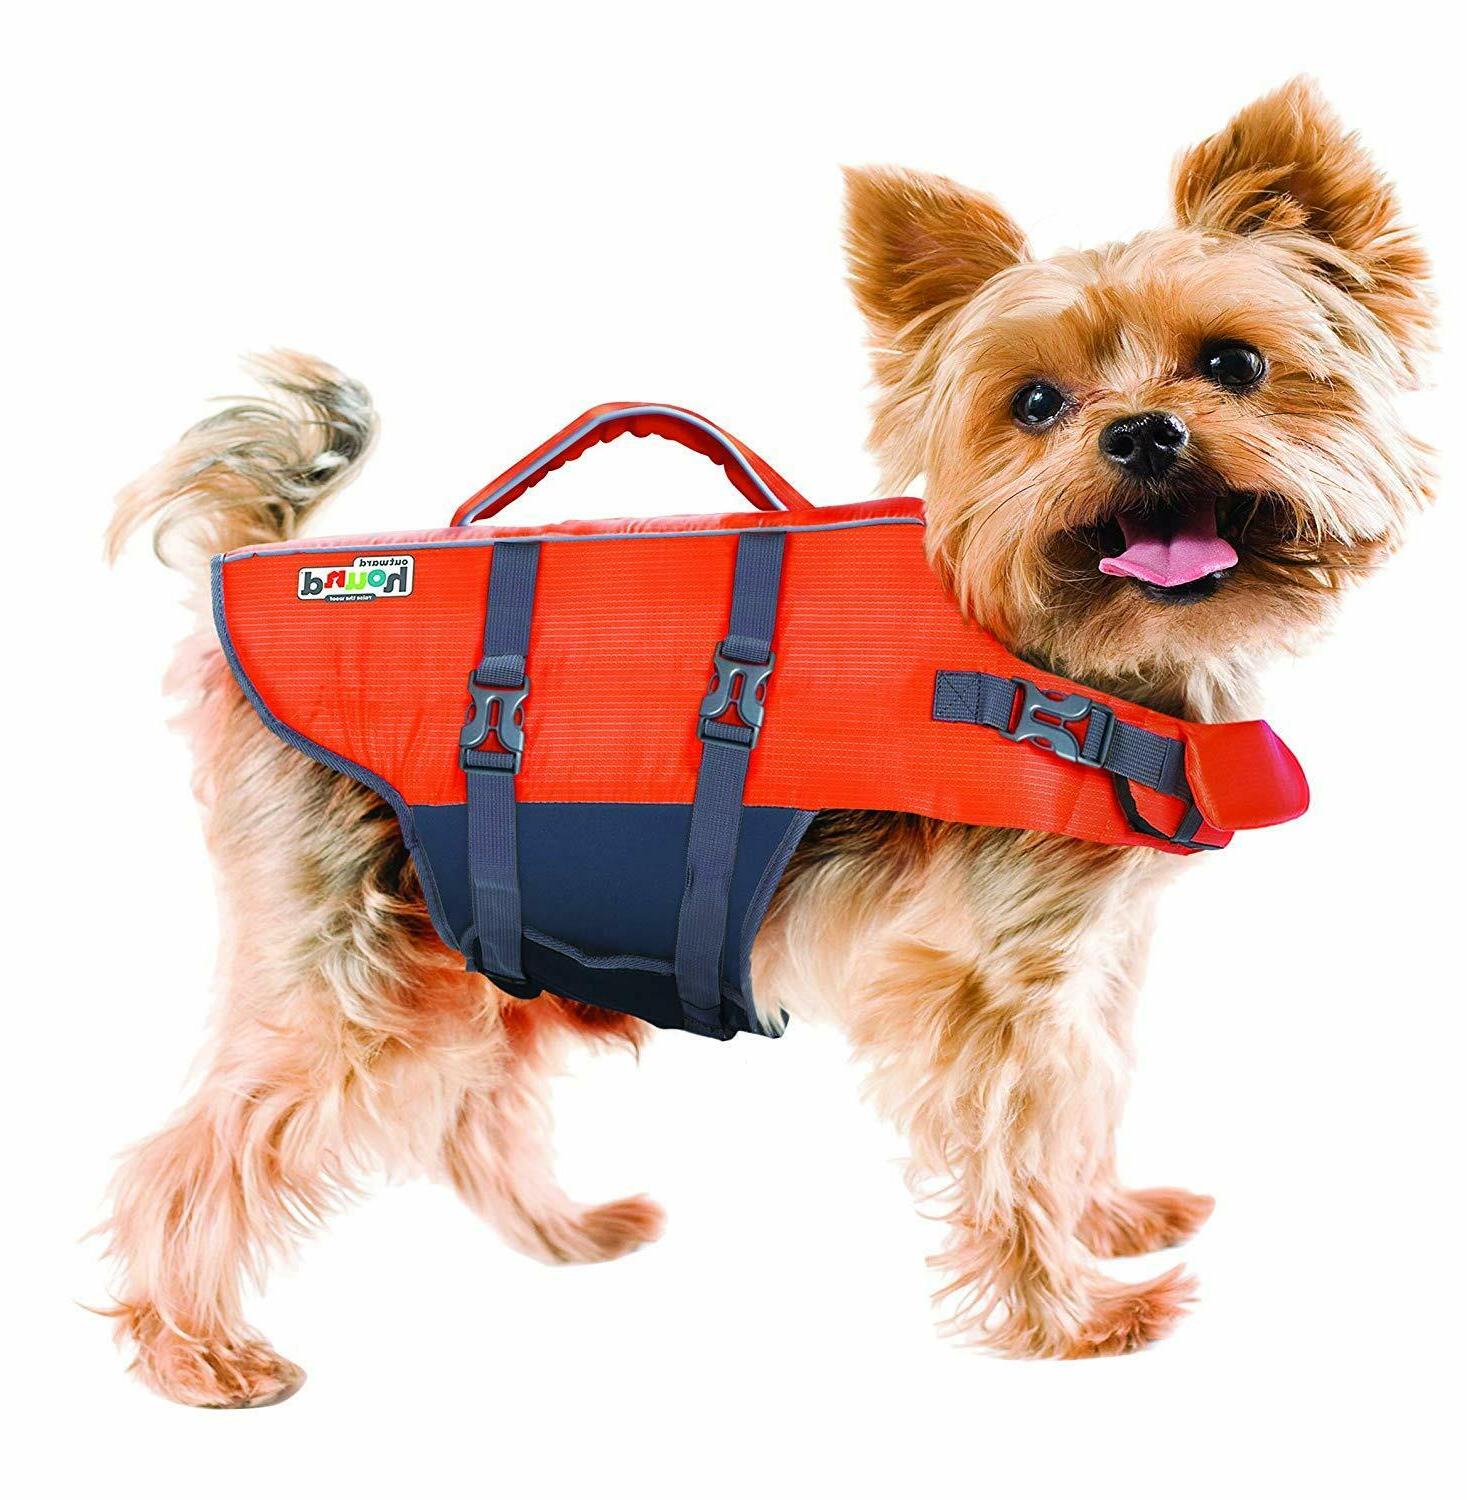 NEW Outward Hound Granby Splash Dog Life Jacket, Orange, Small